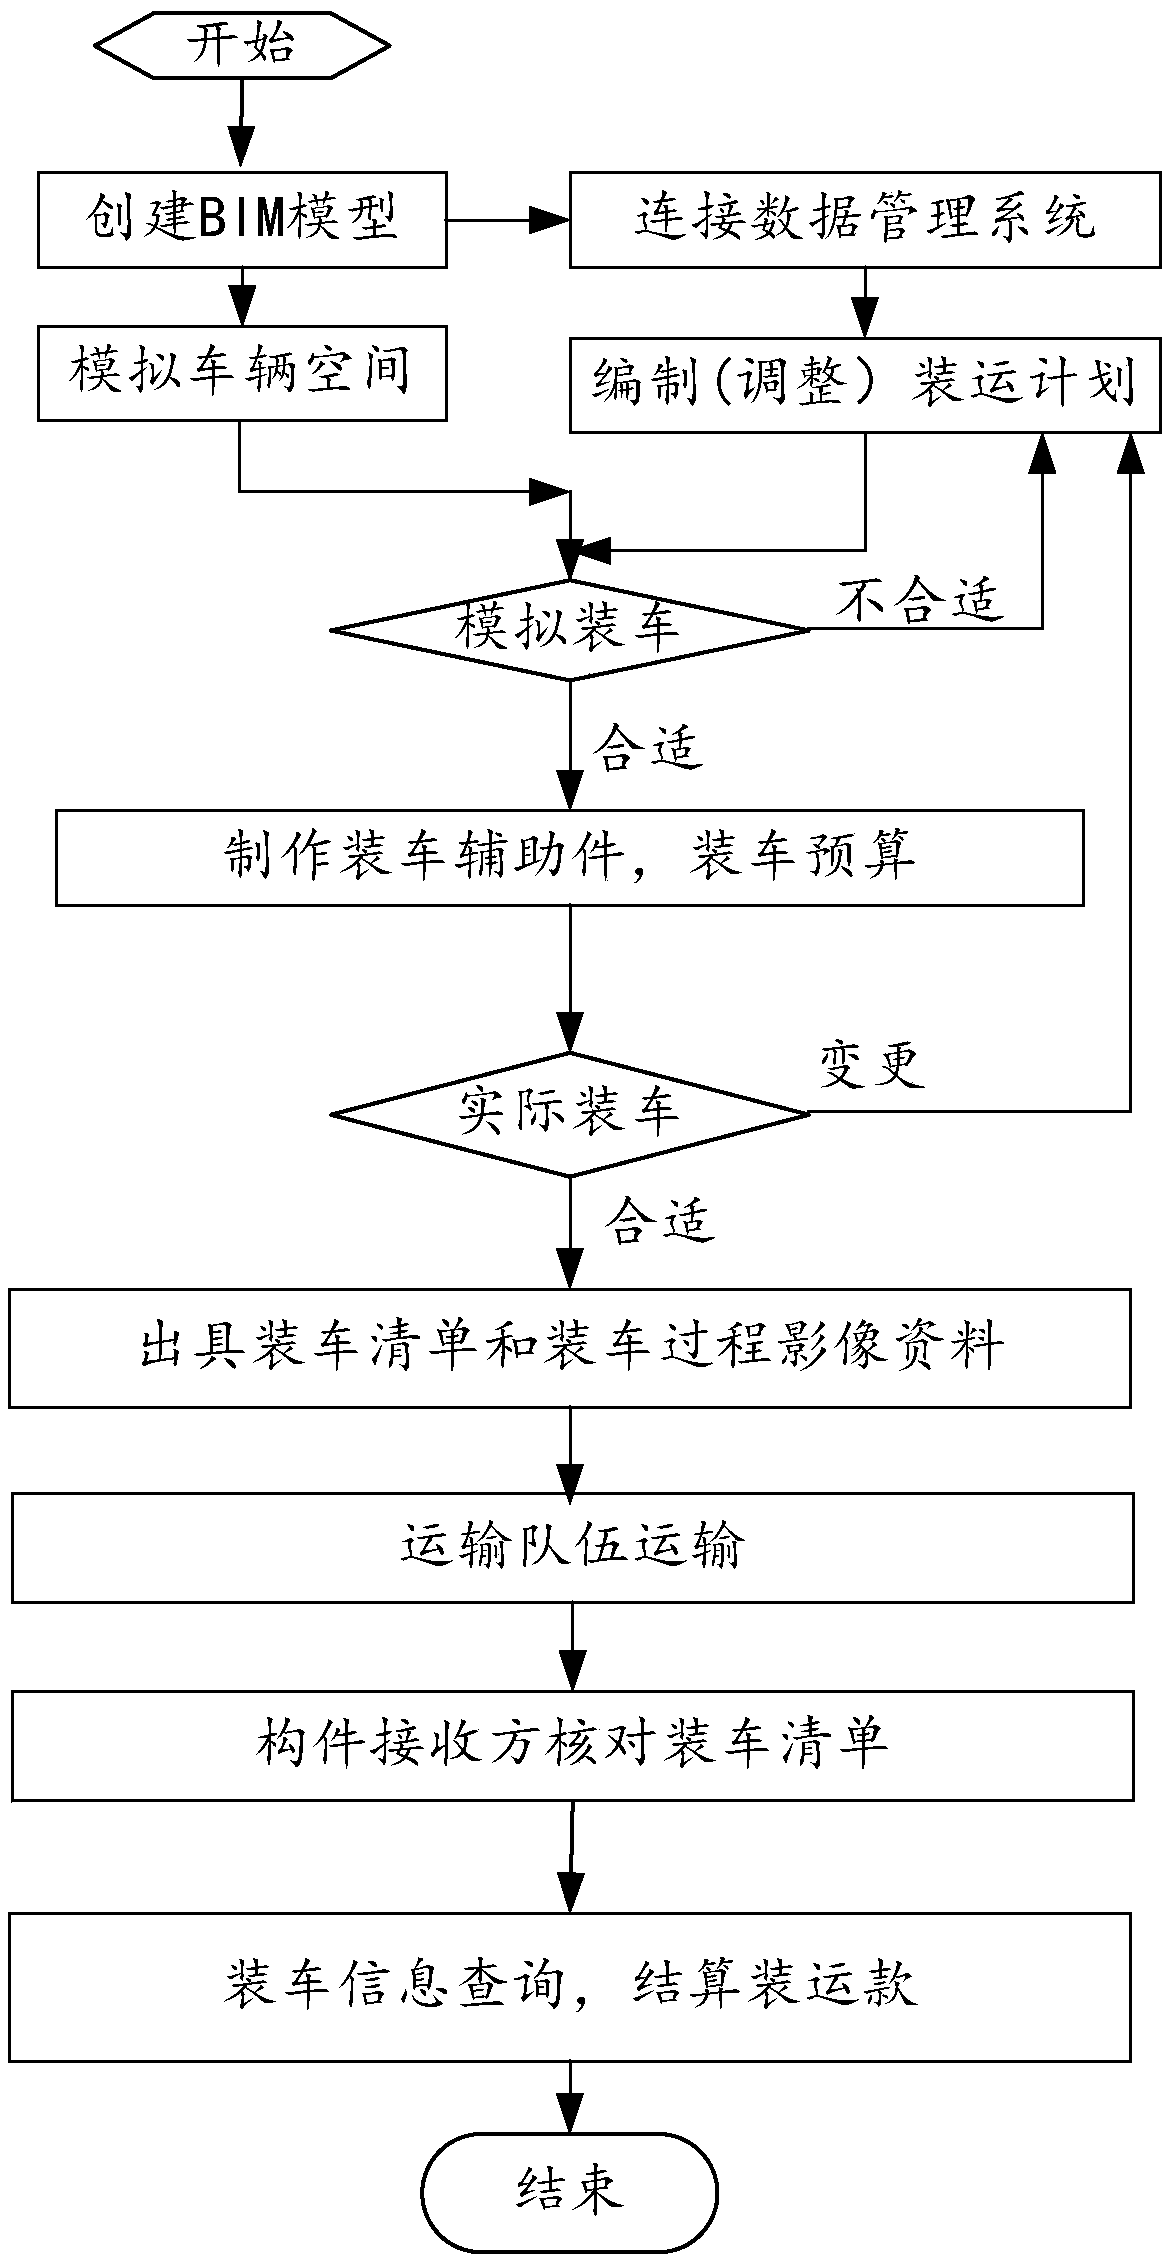 Component shipping method based on BIM technology